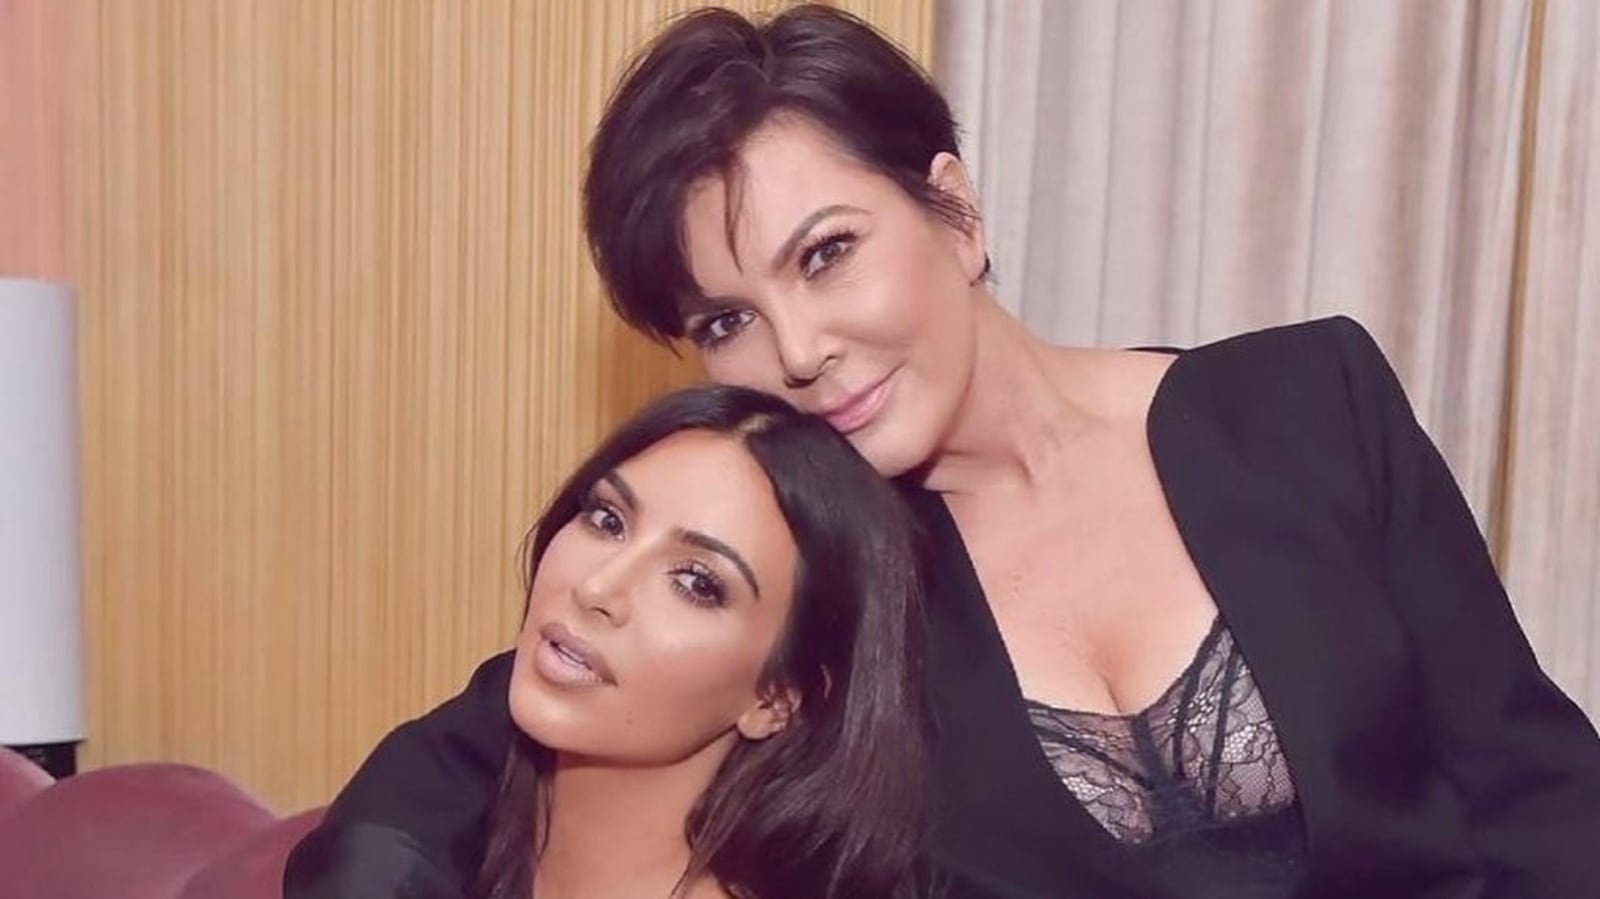 Kim kardashian porn leaked